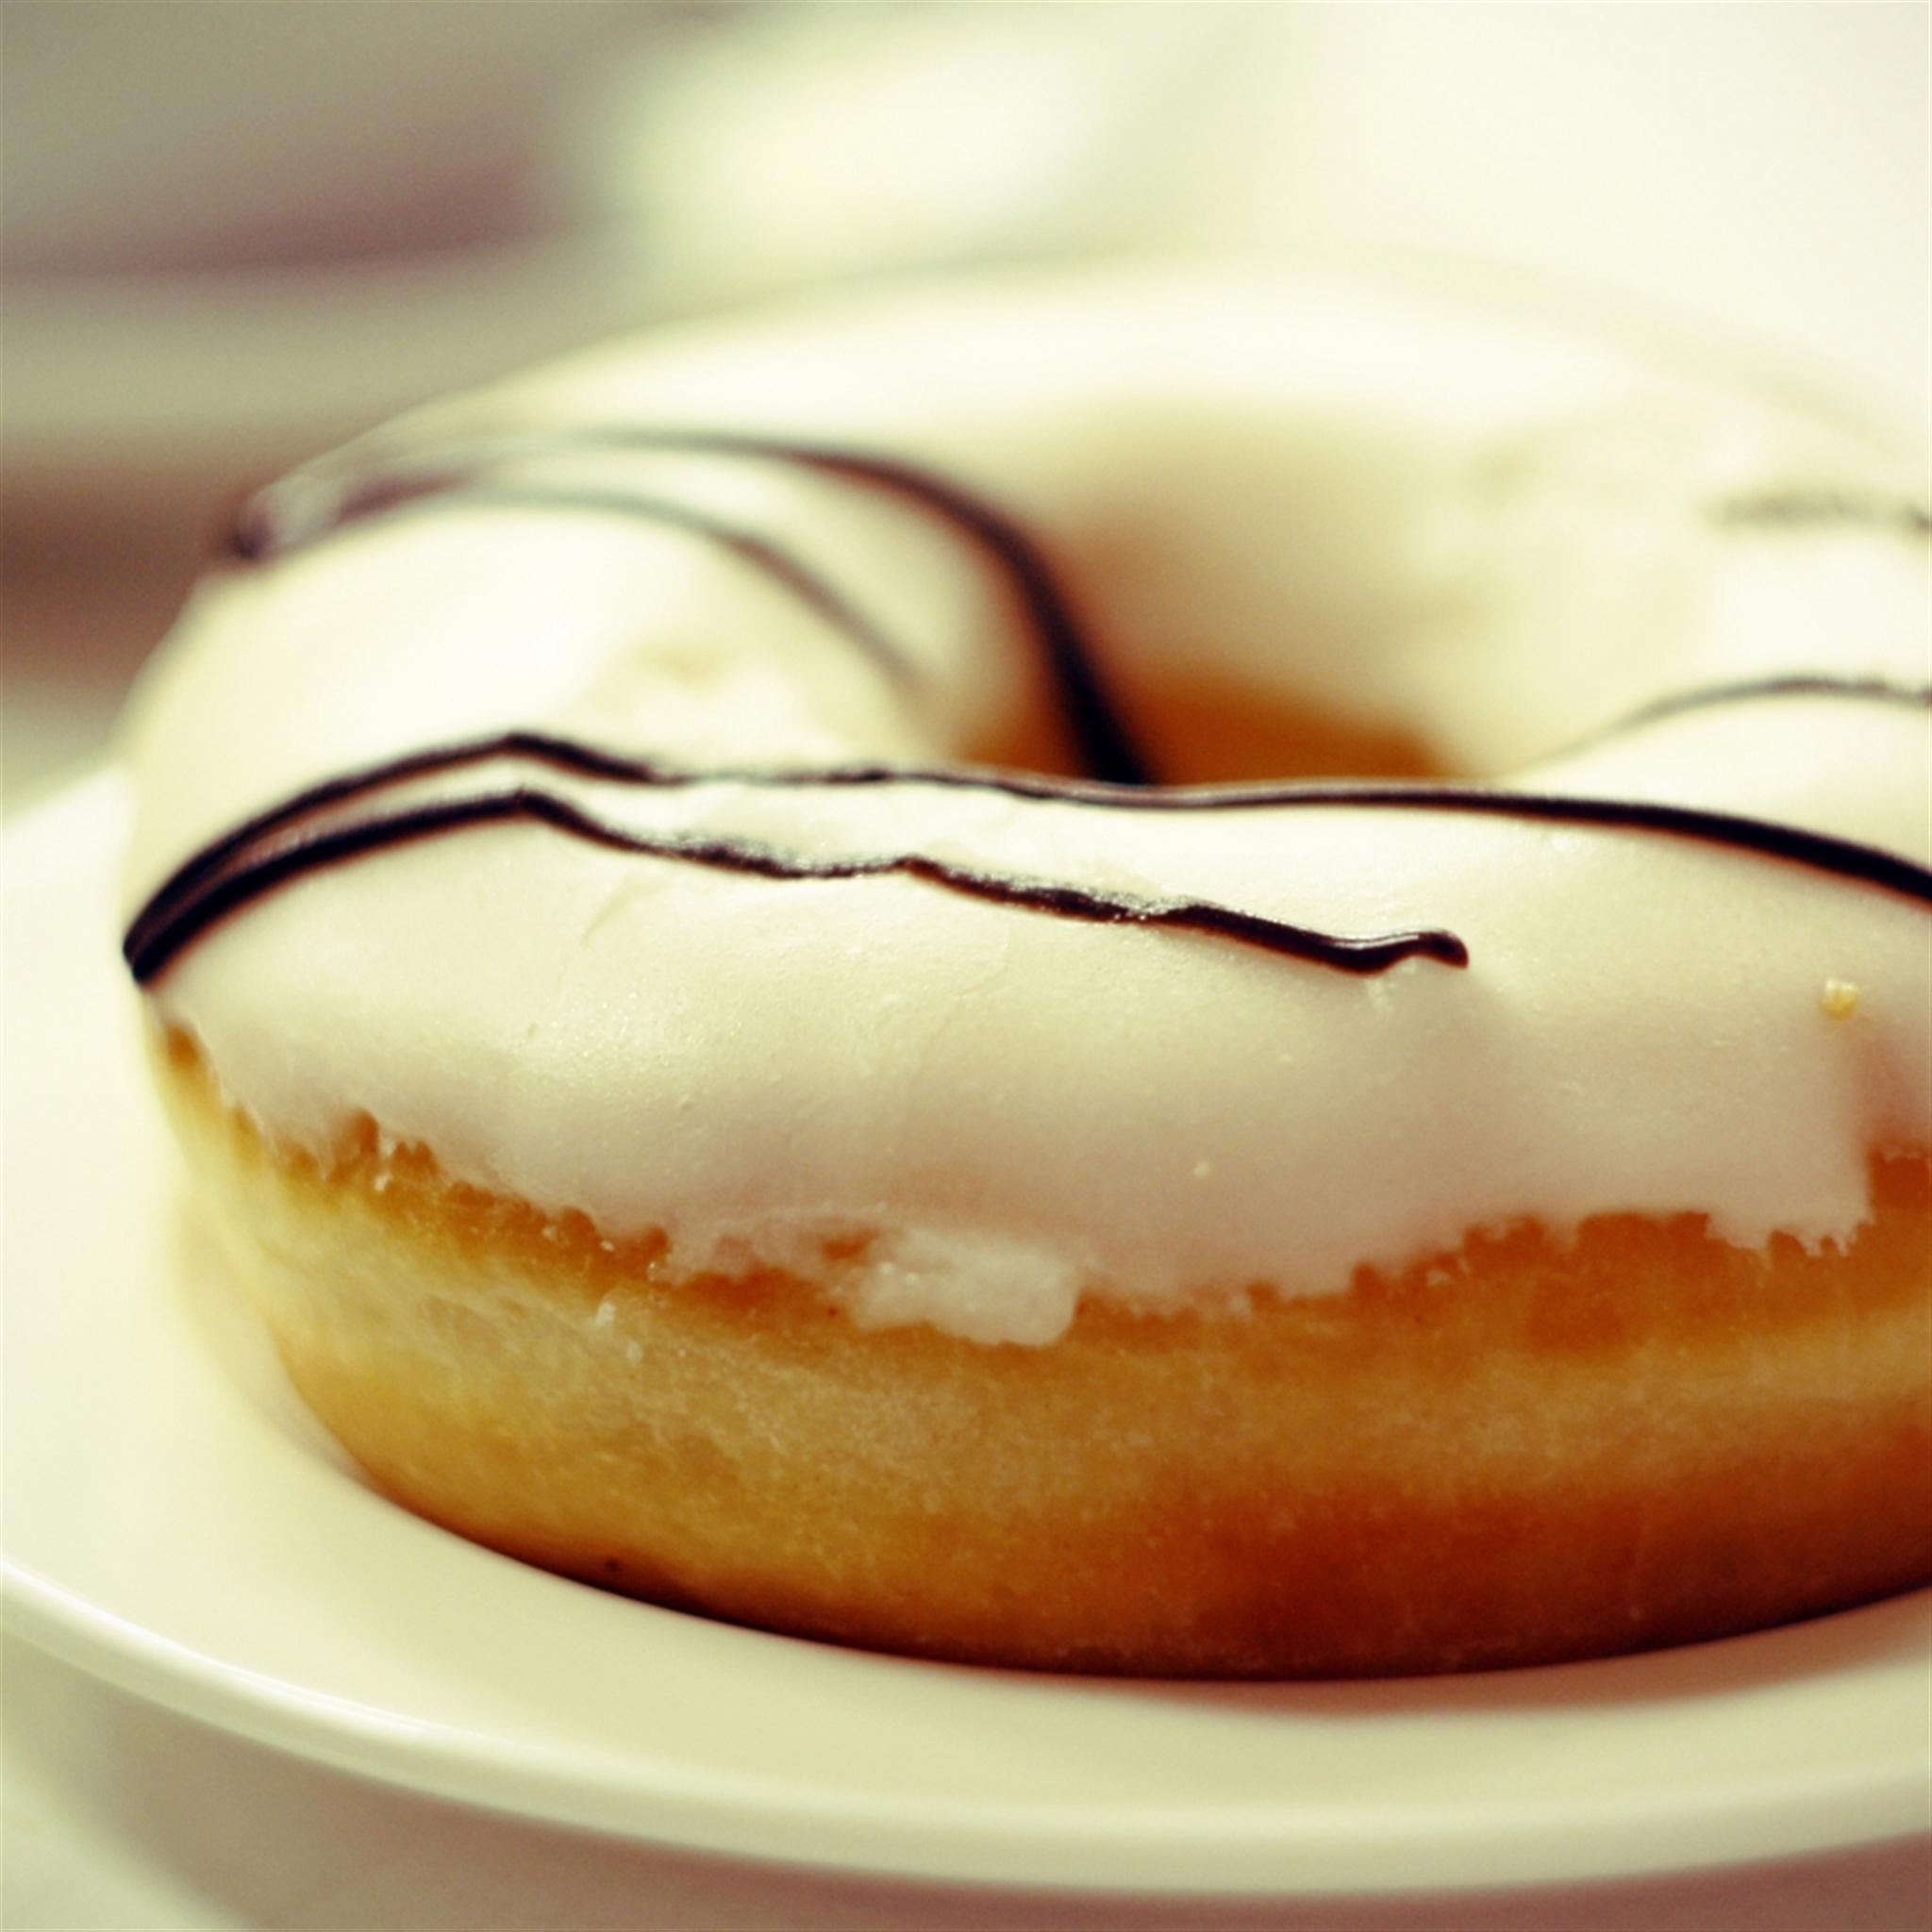 Yummy Sweety Donut Dessert iPad Air Wallpaper Download. iPhone